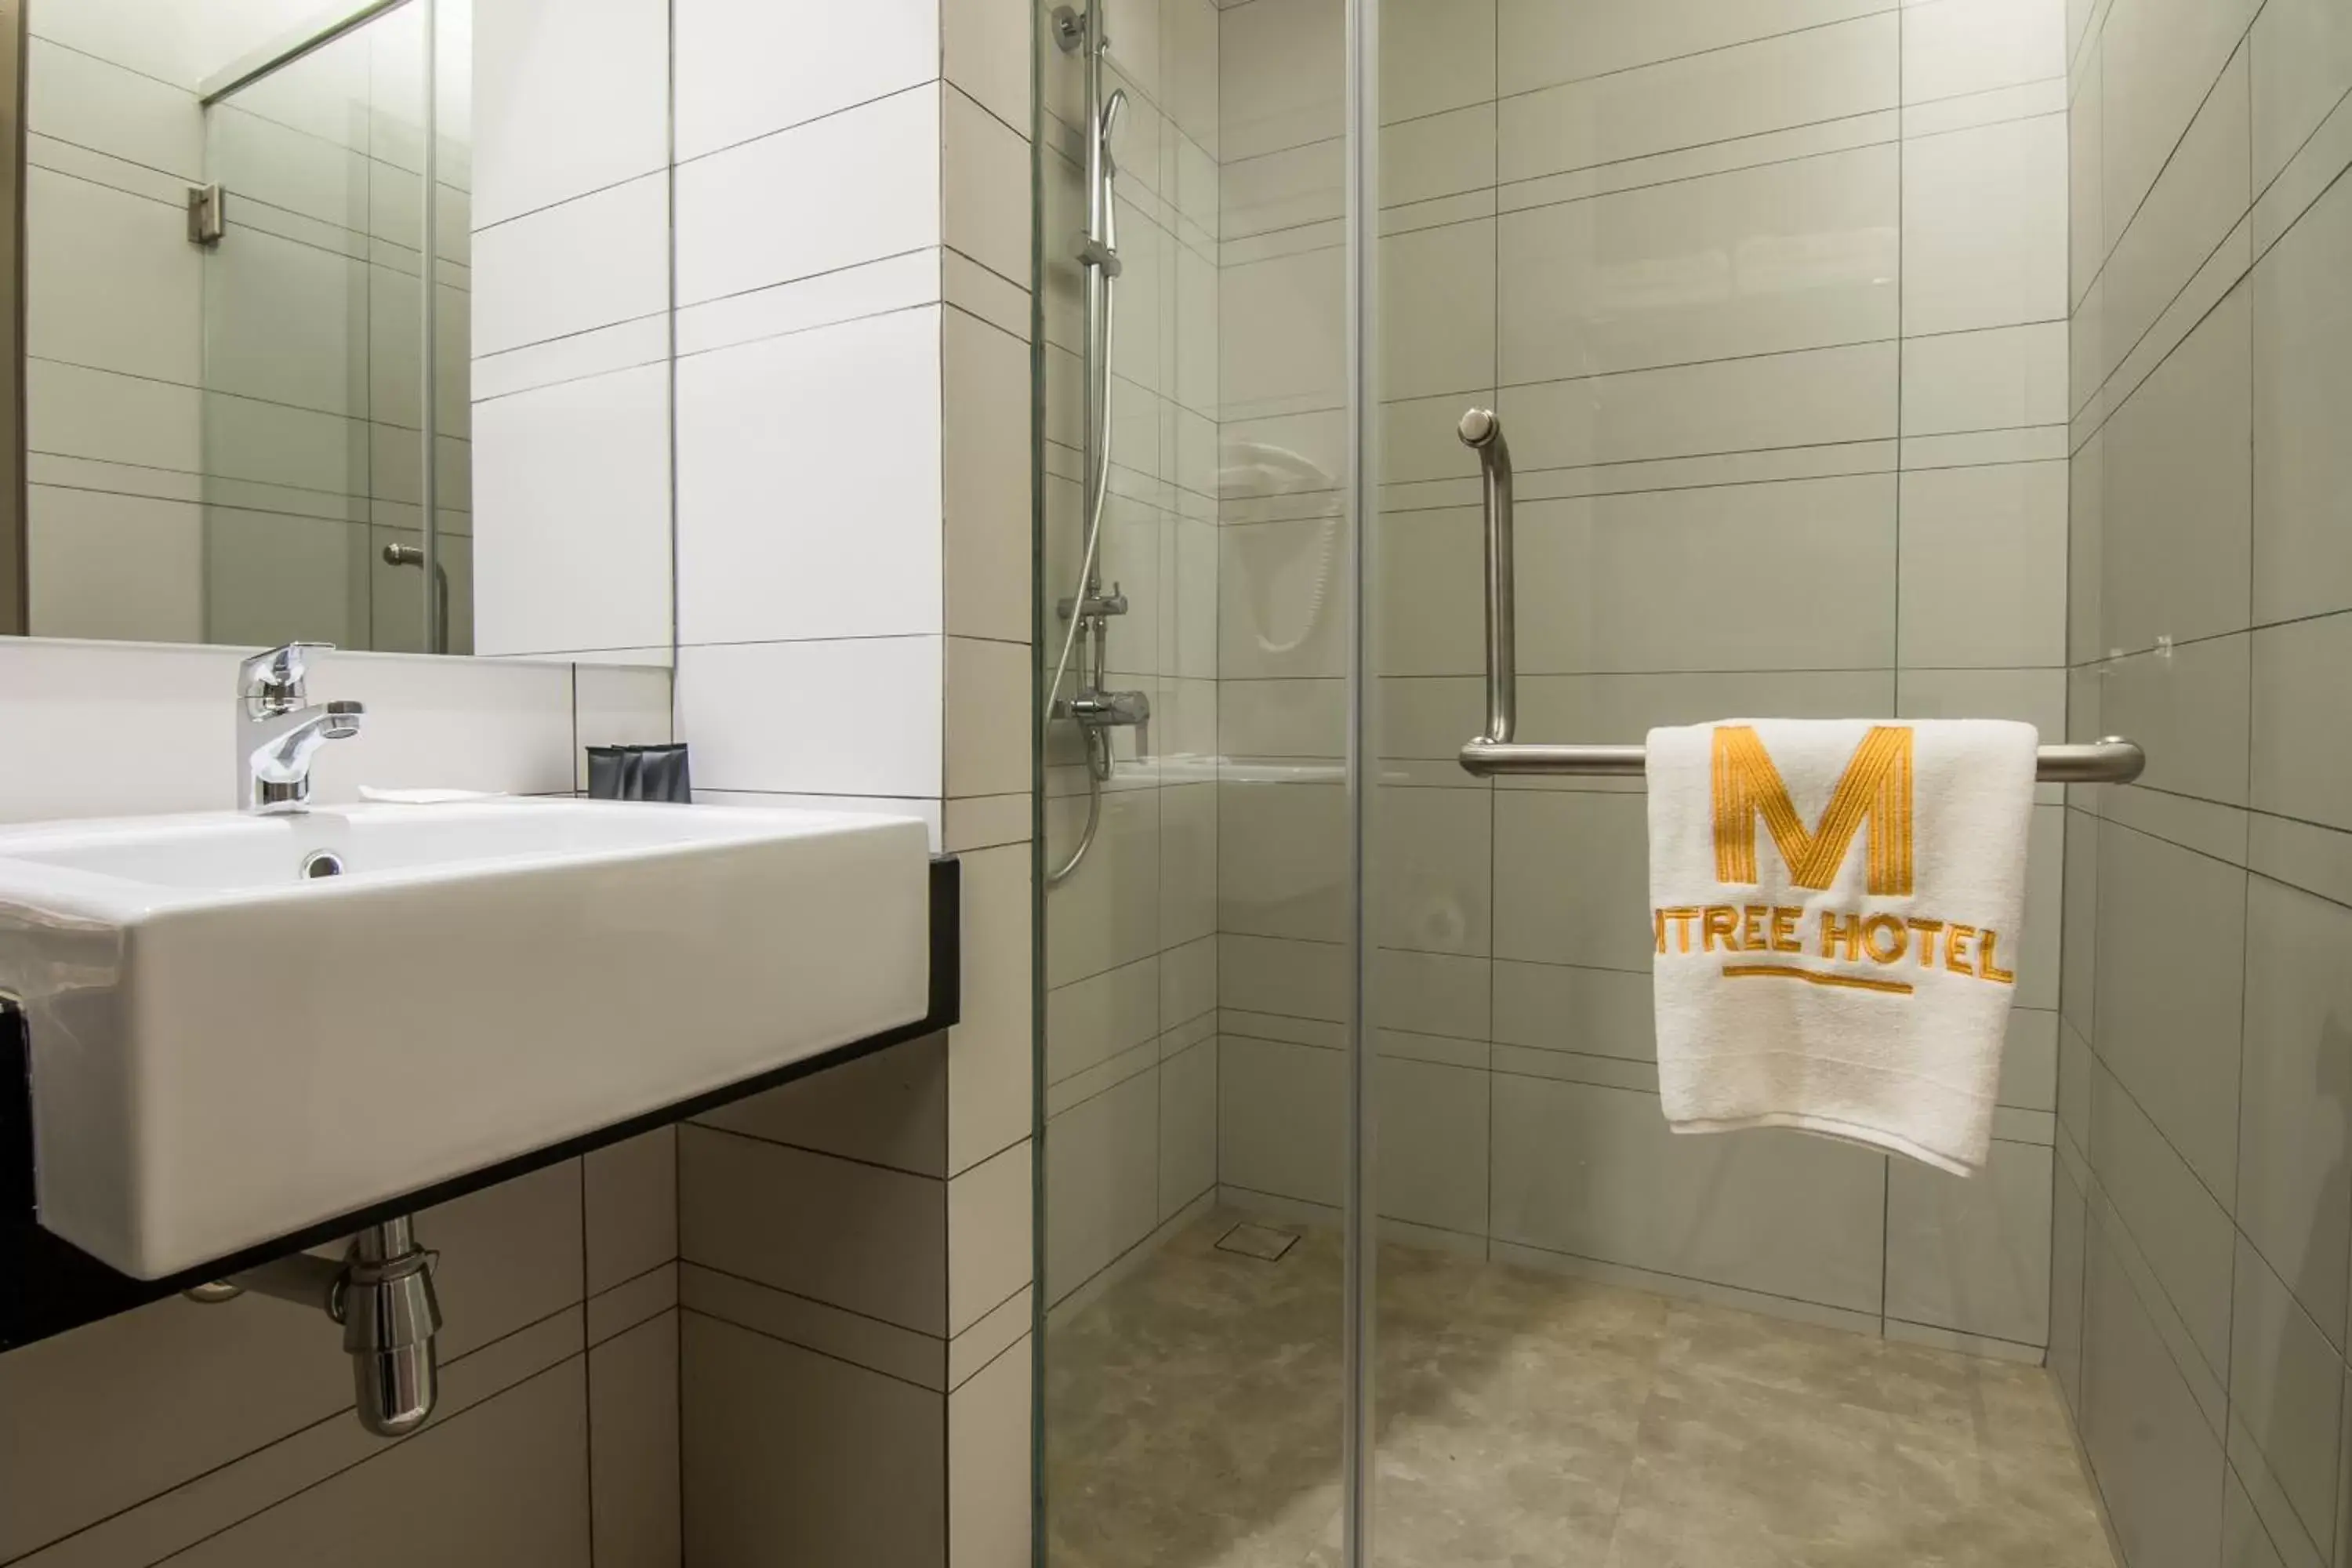 Bathroom in MTREE Hotel